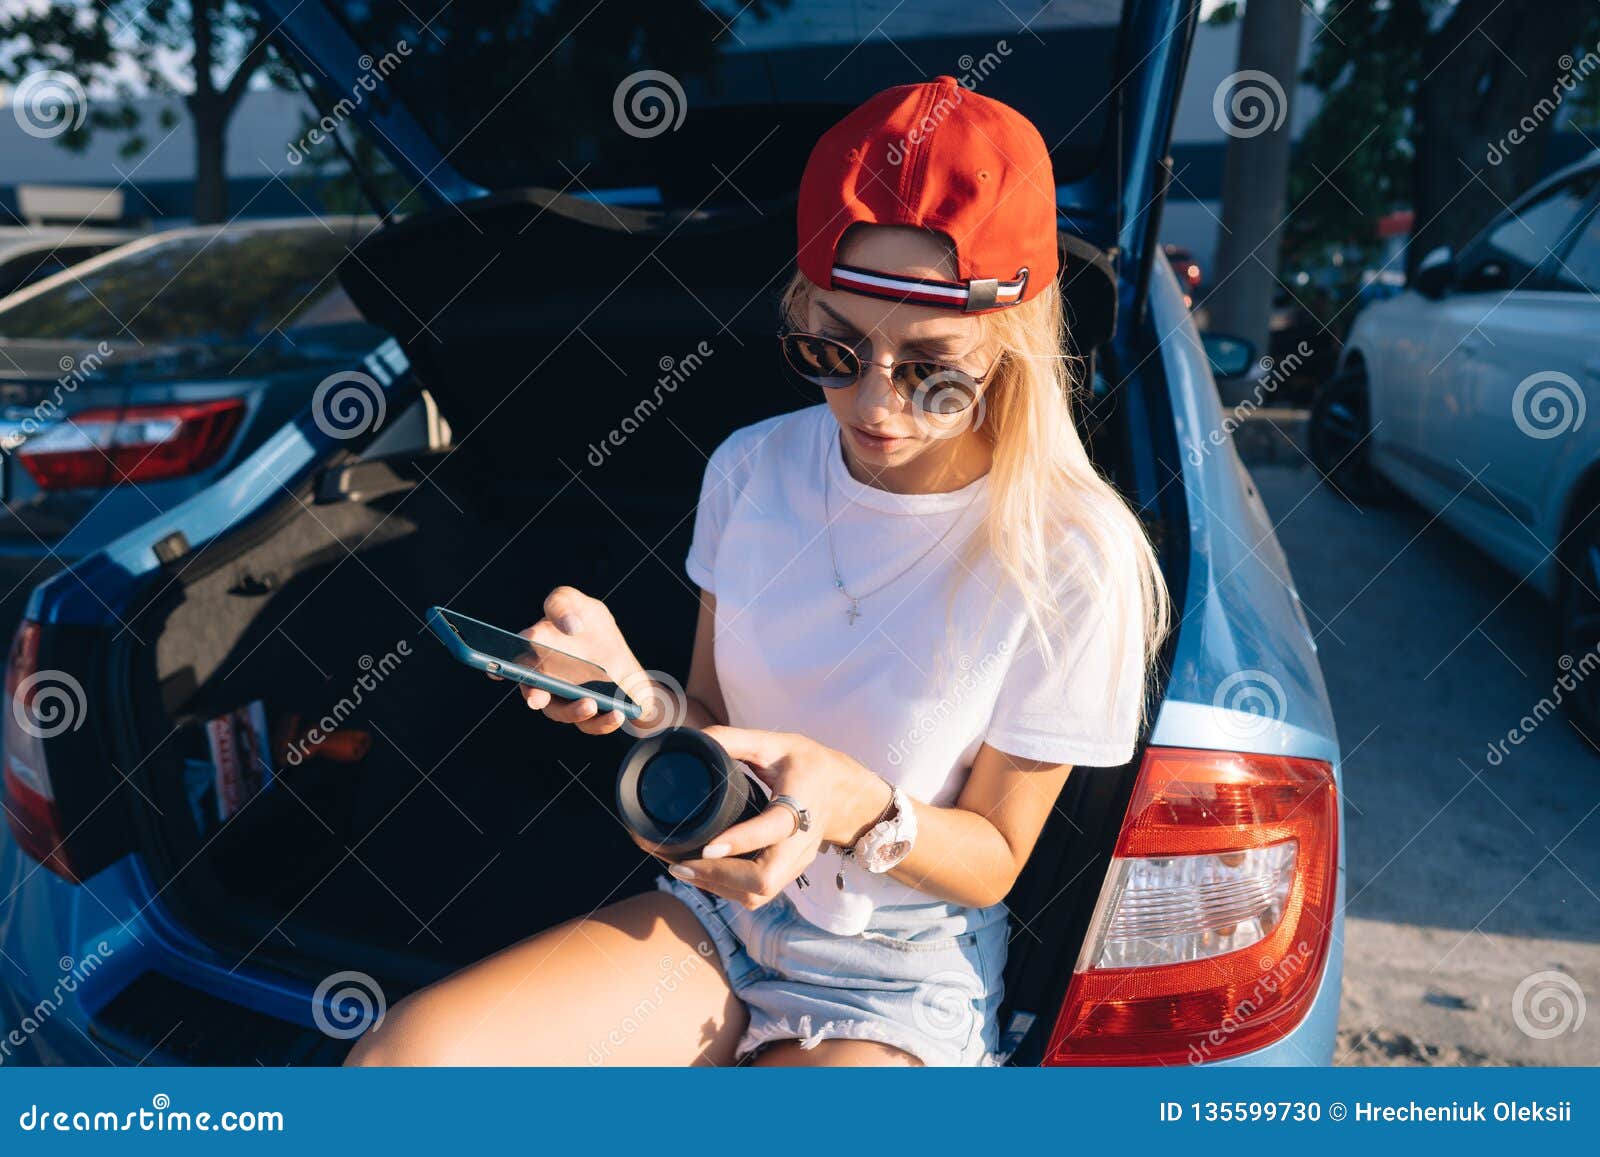 Premium Photo | Beautiful fashionable young woman in glasses posing near car